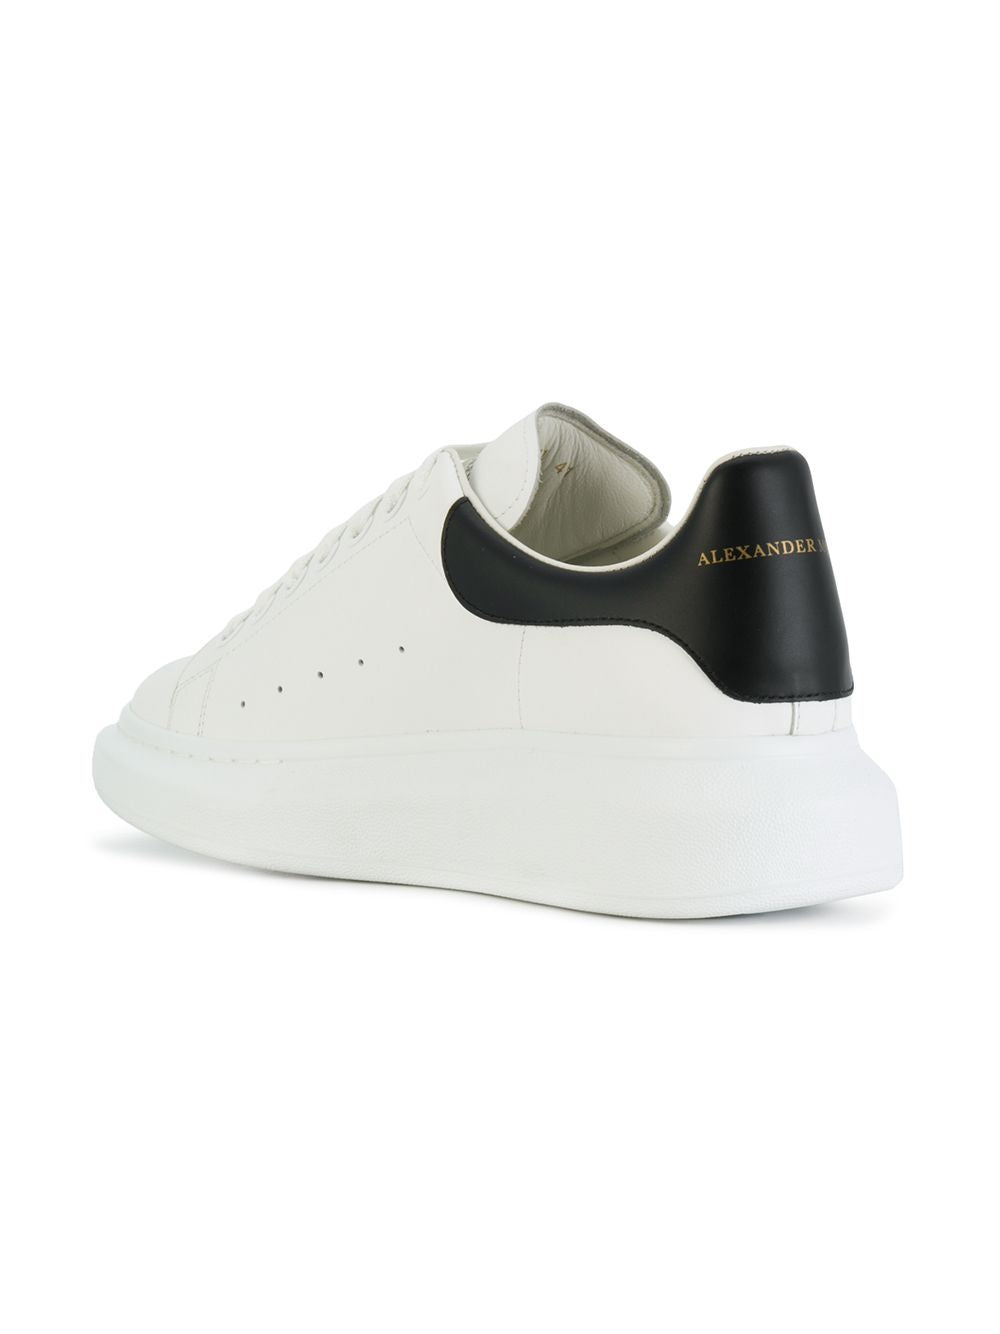 White & Black Alexander McQueen Larry Leather Oversized Sneakers - Back Side